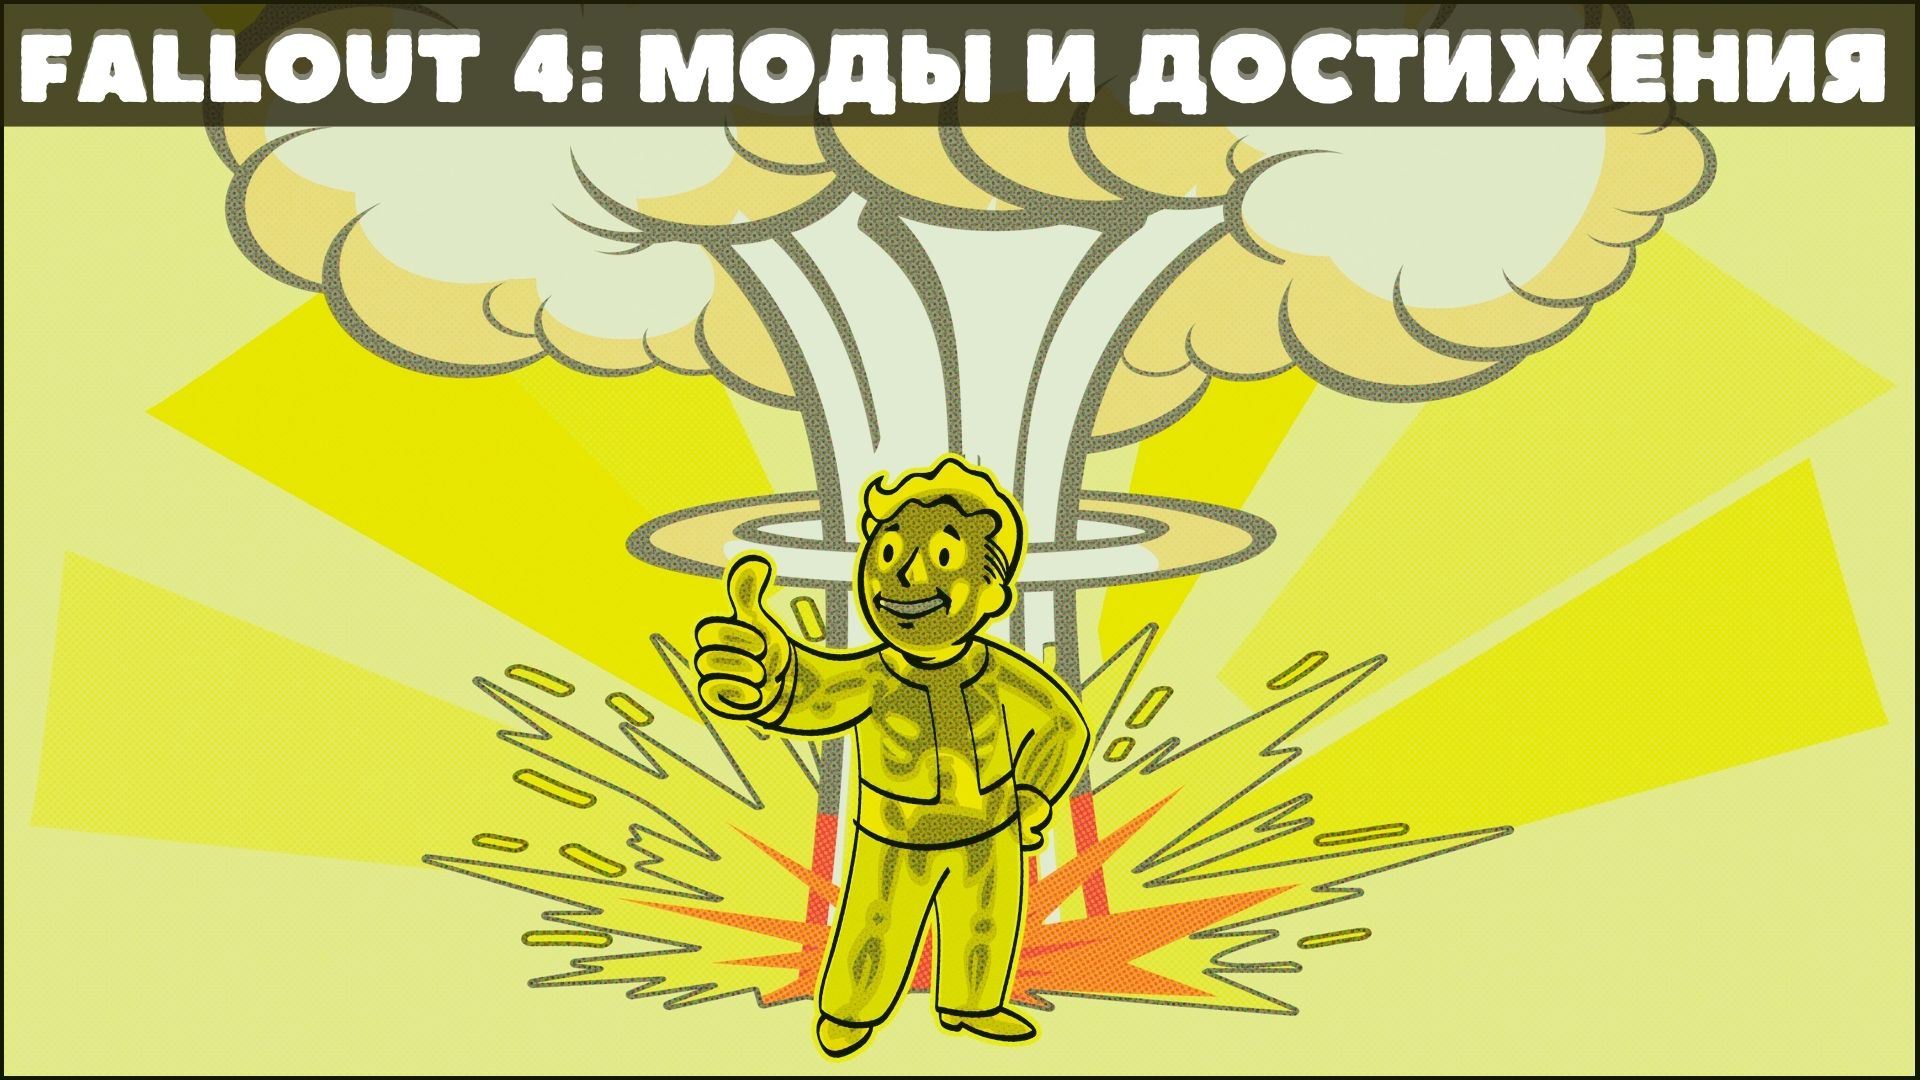 Fallout 4 получение достижений (116) фото